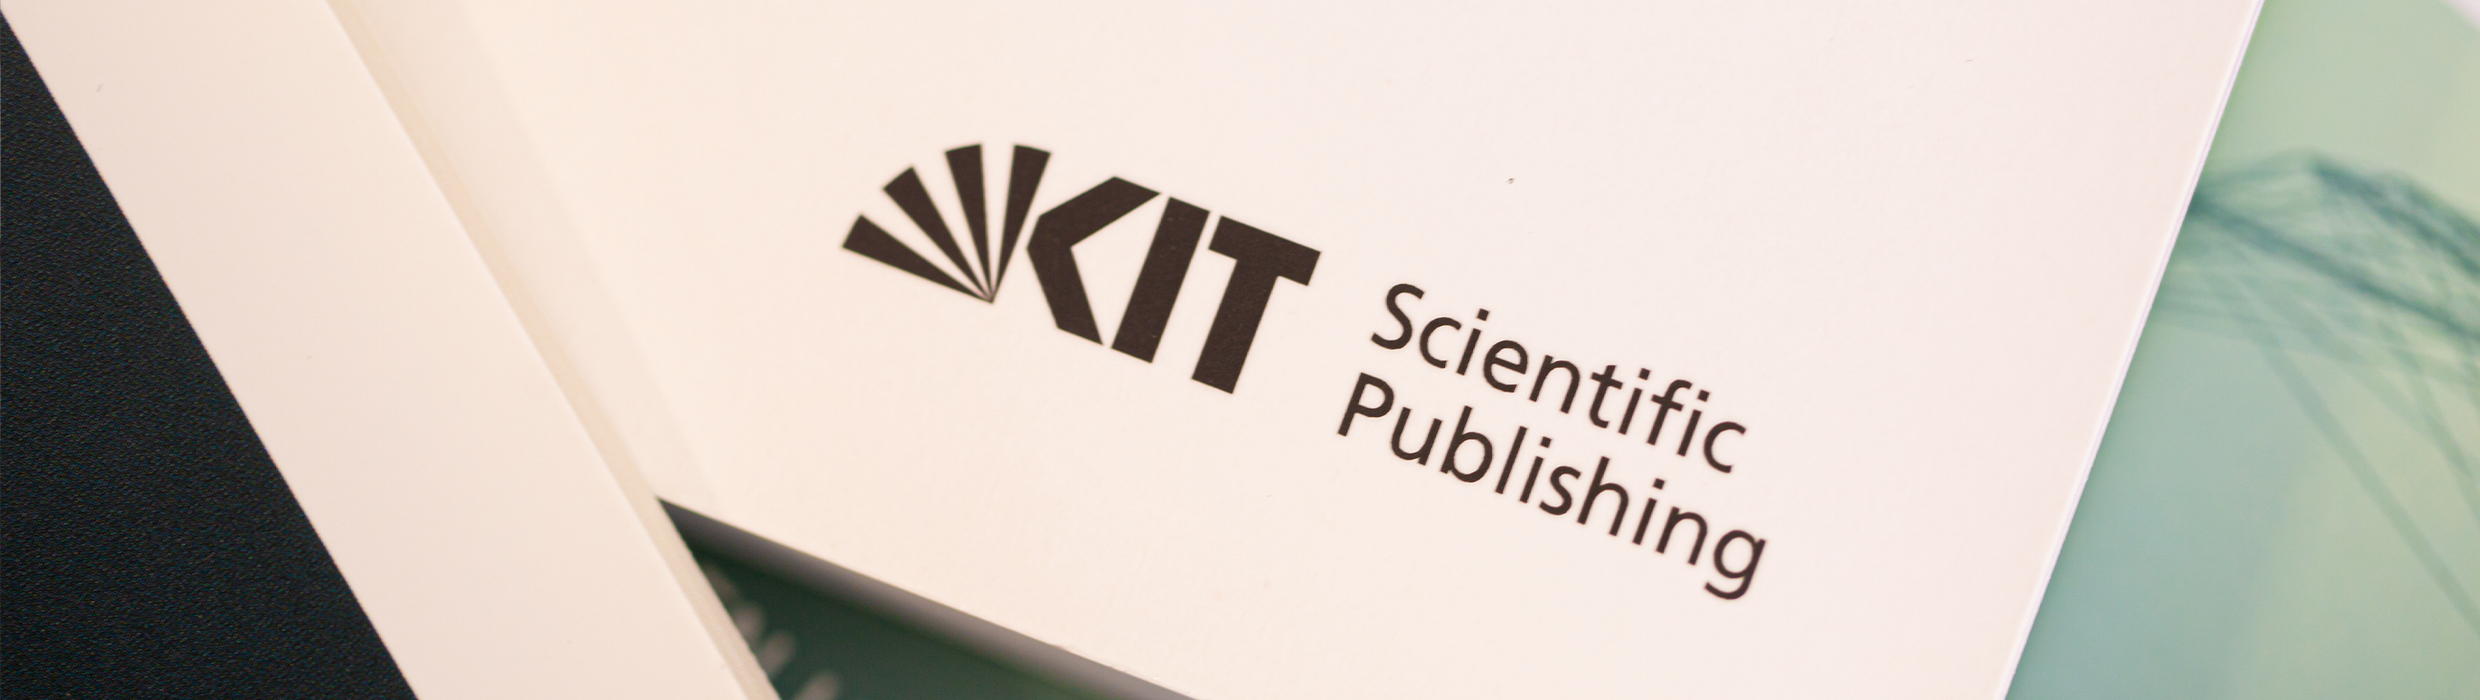 Foto KIT Scientific Publishing Über den Verlag